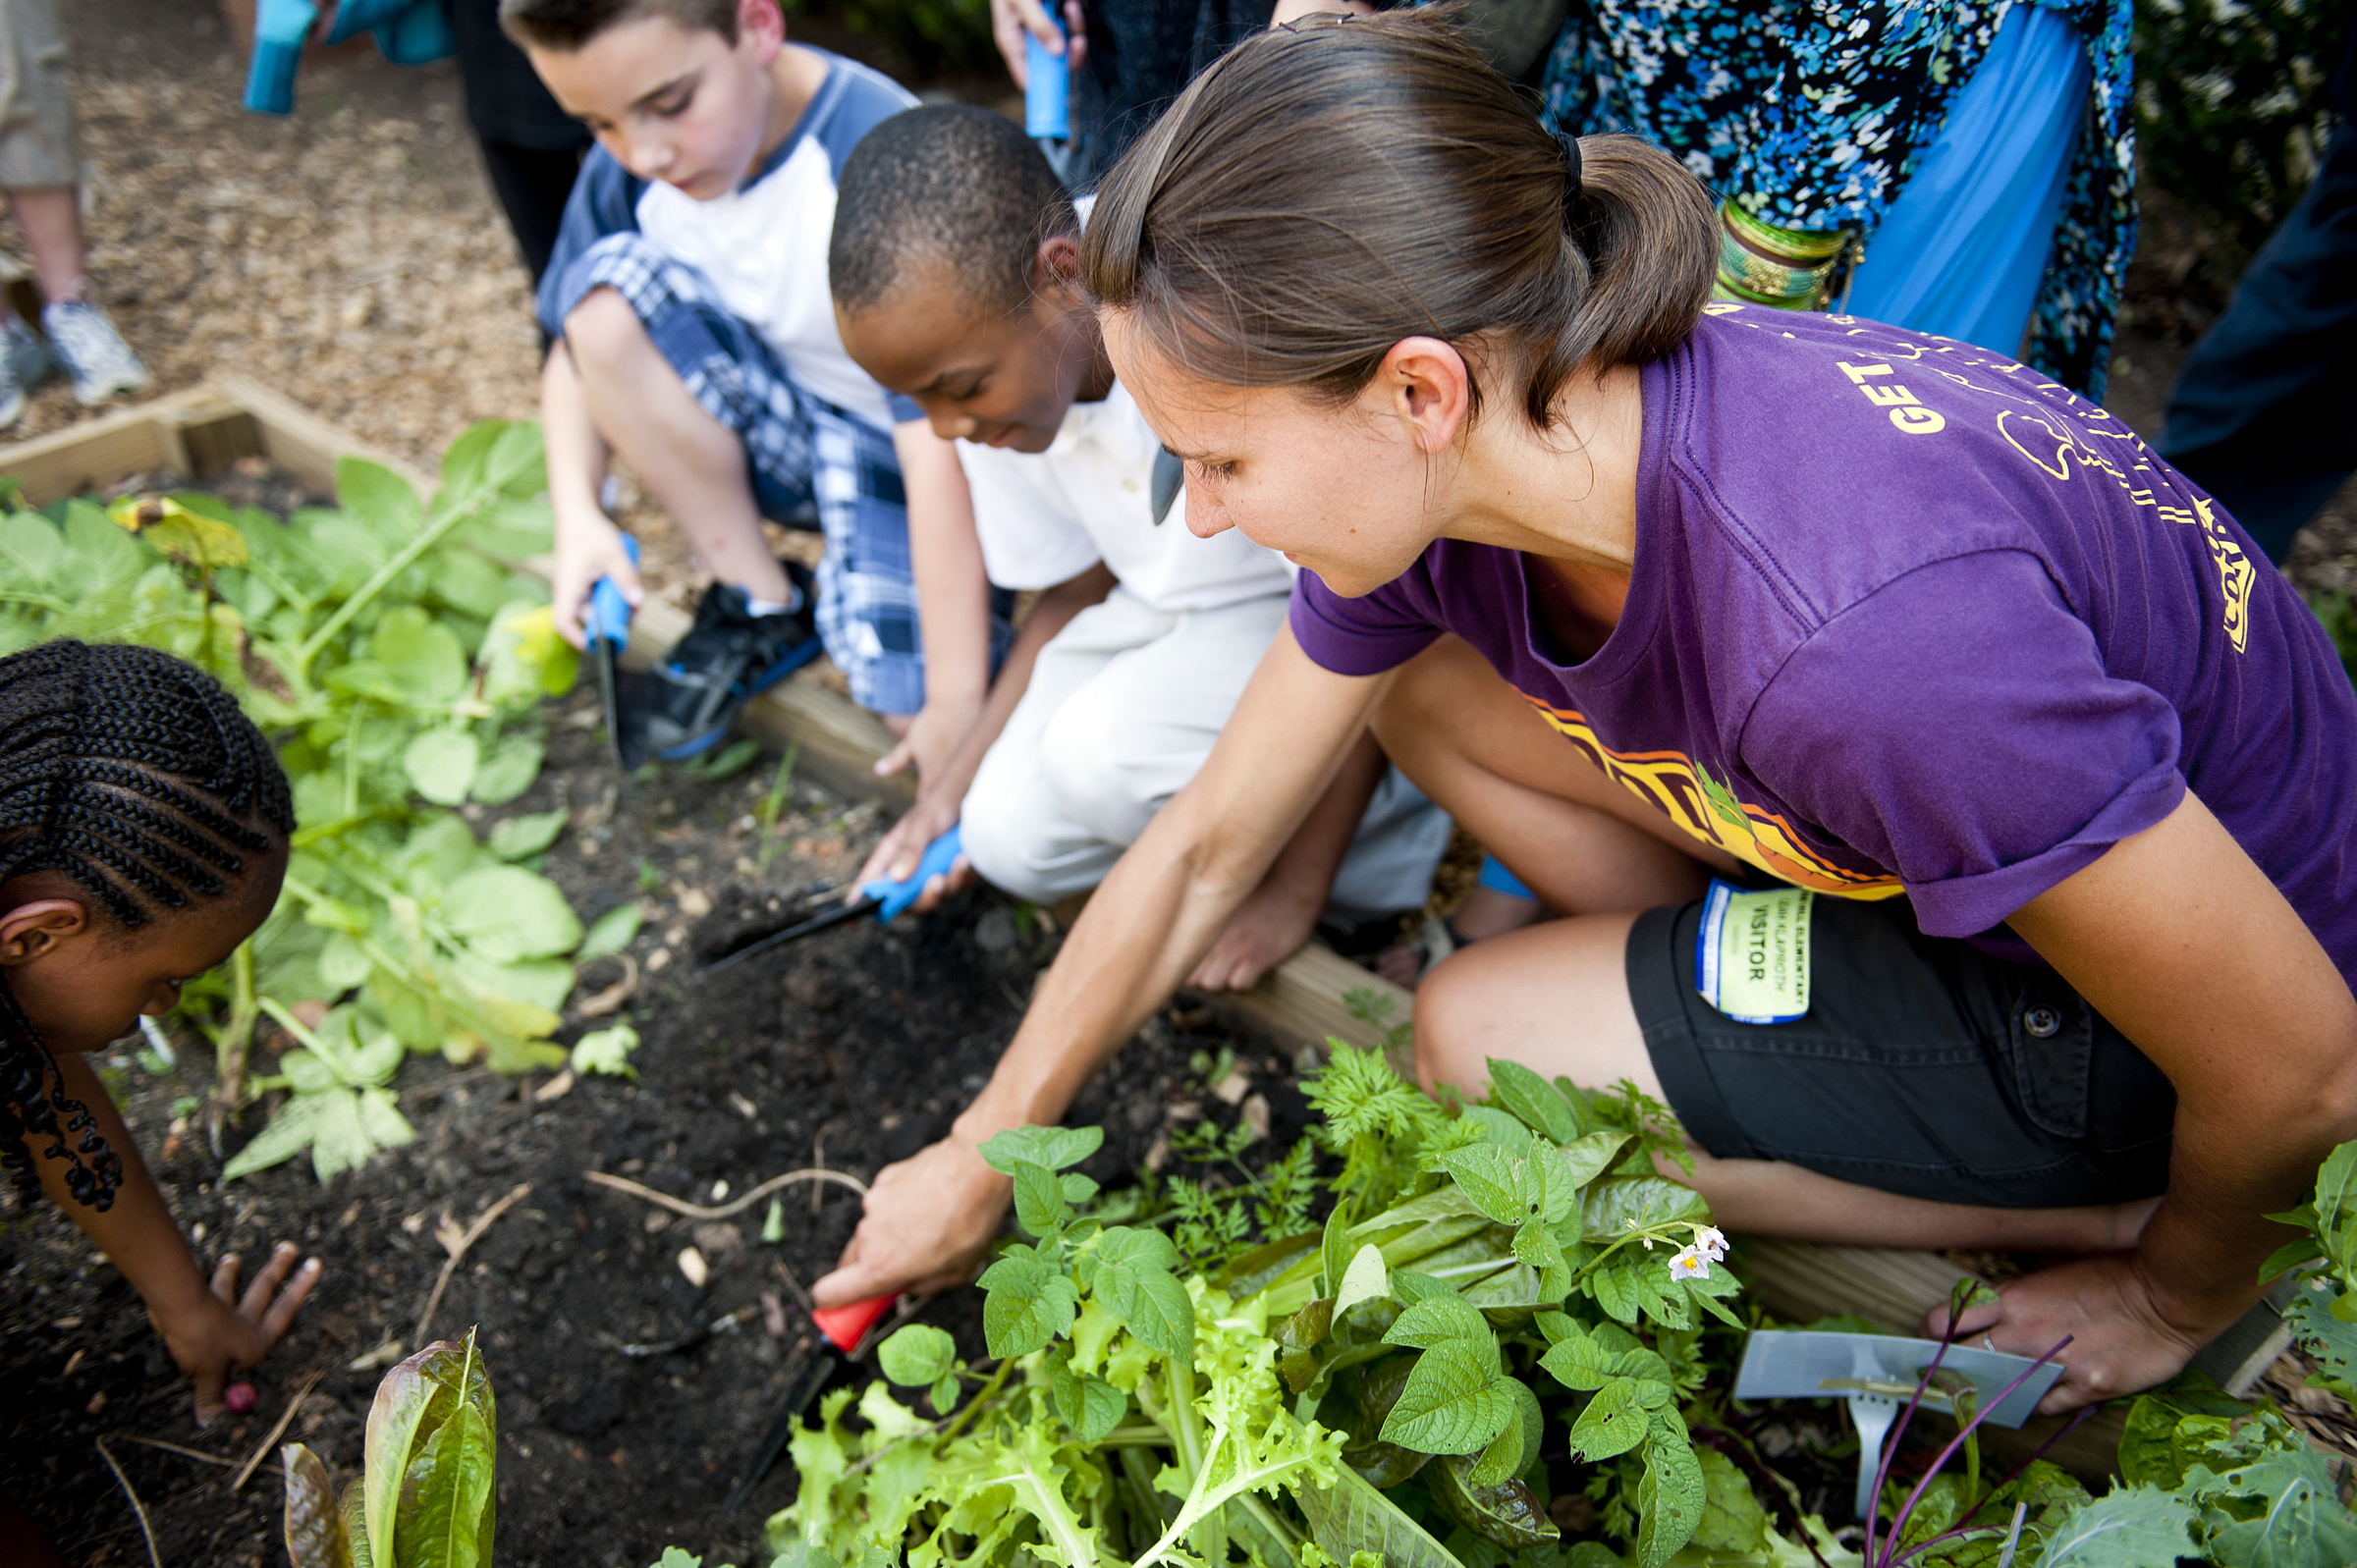 Students discovering healthy foods in the school garden.